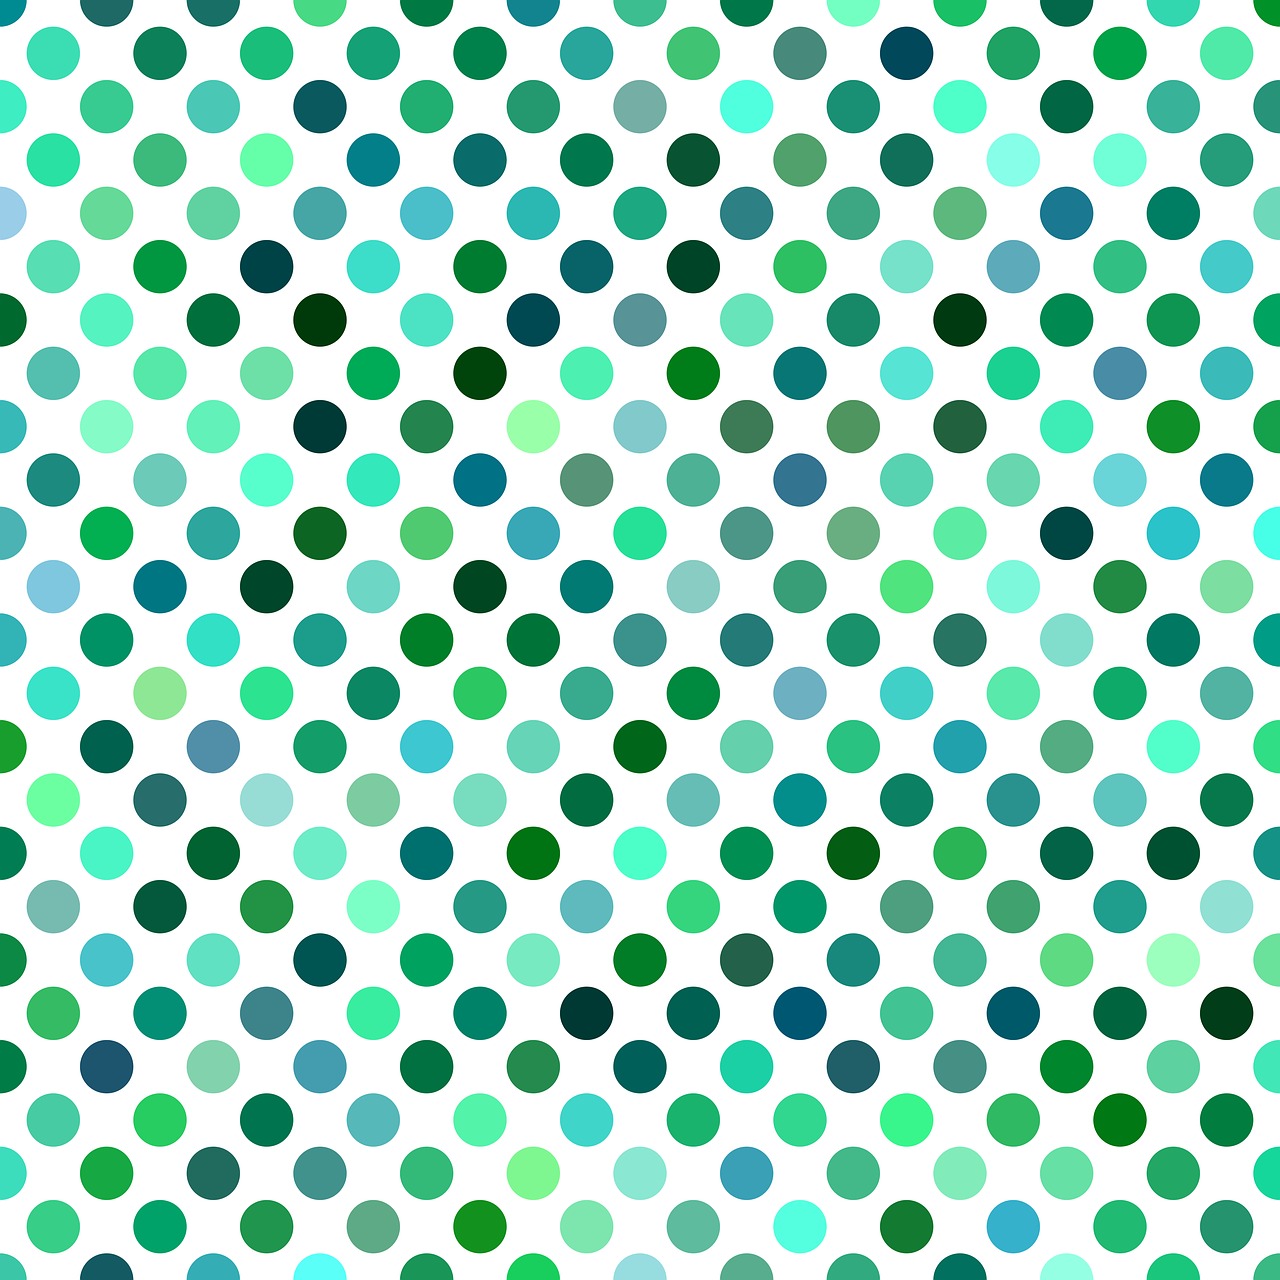 polka dot pattern background free photo